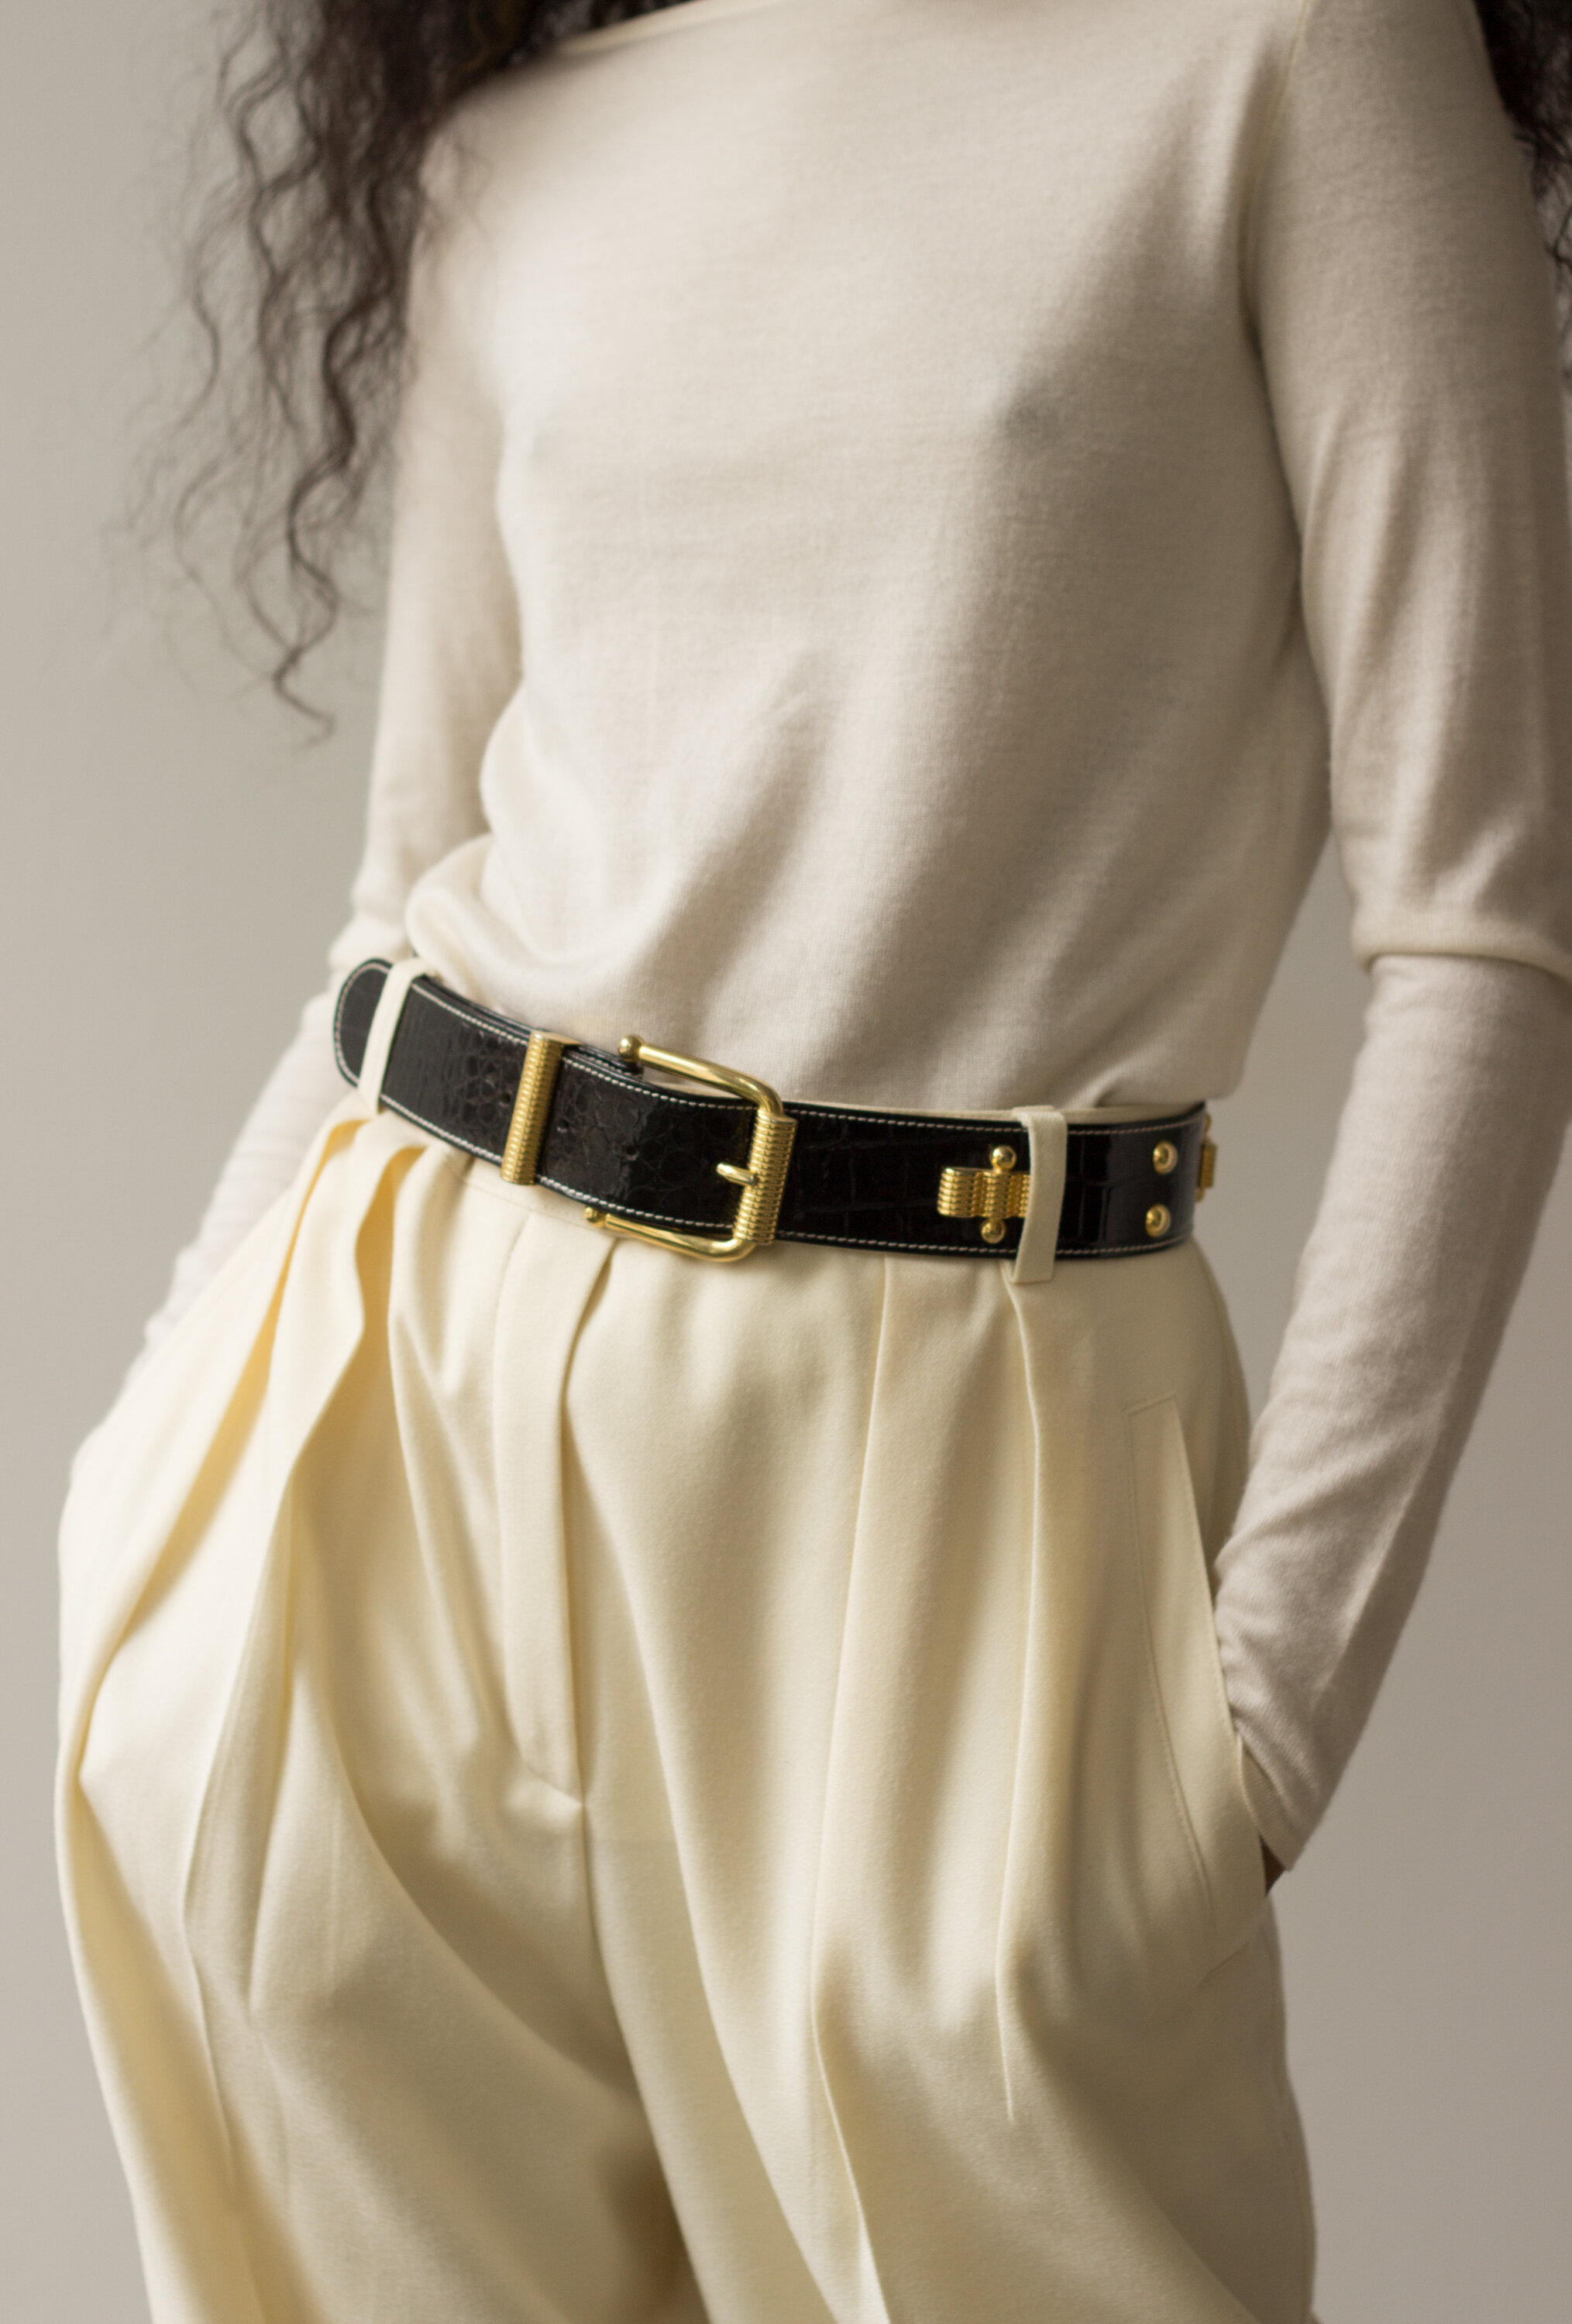 telegram Salie manager 1980s ESCADA Black Leather and Gold Studded Belt — Wayward Collection